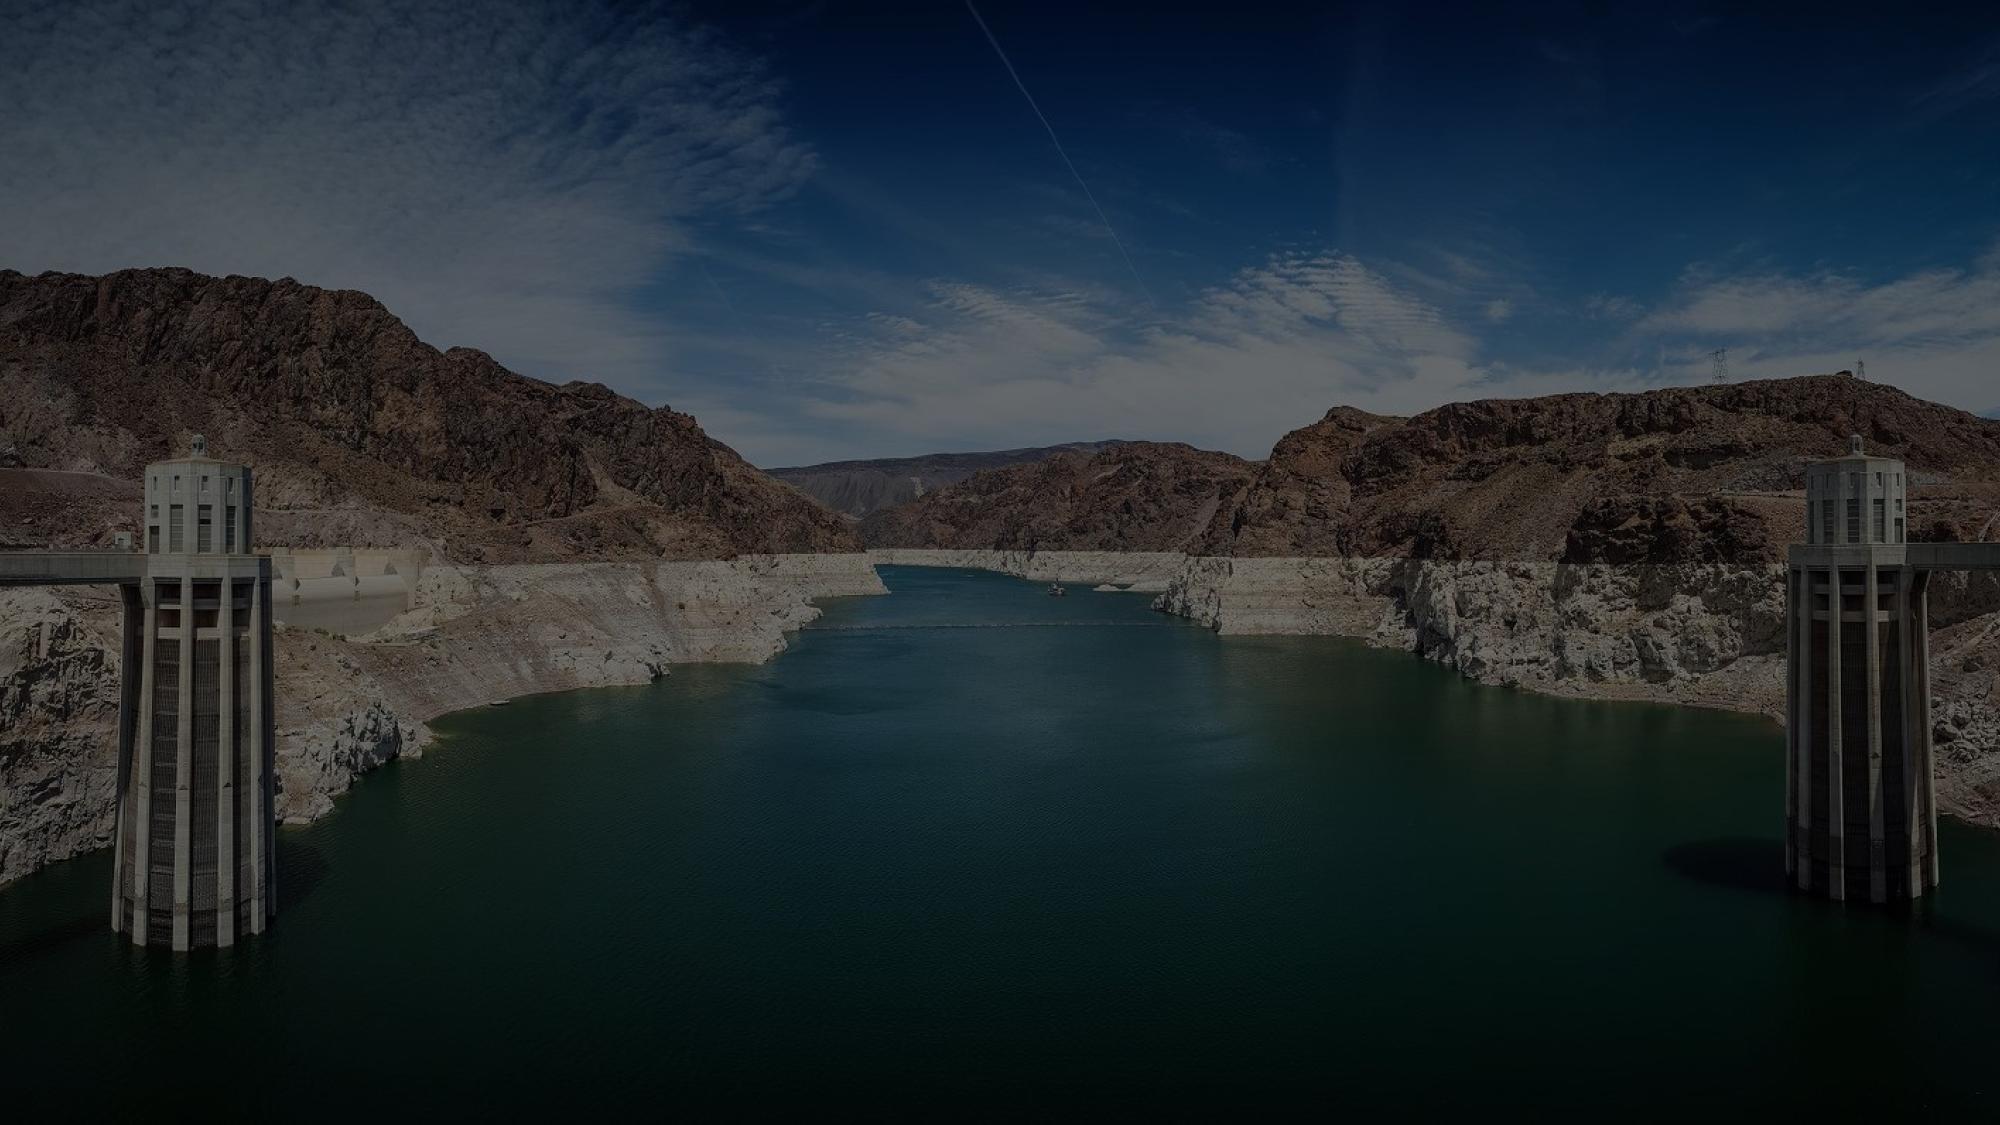 Darkened Photo of a Dam - on location